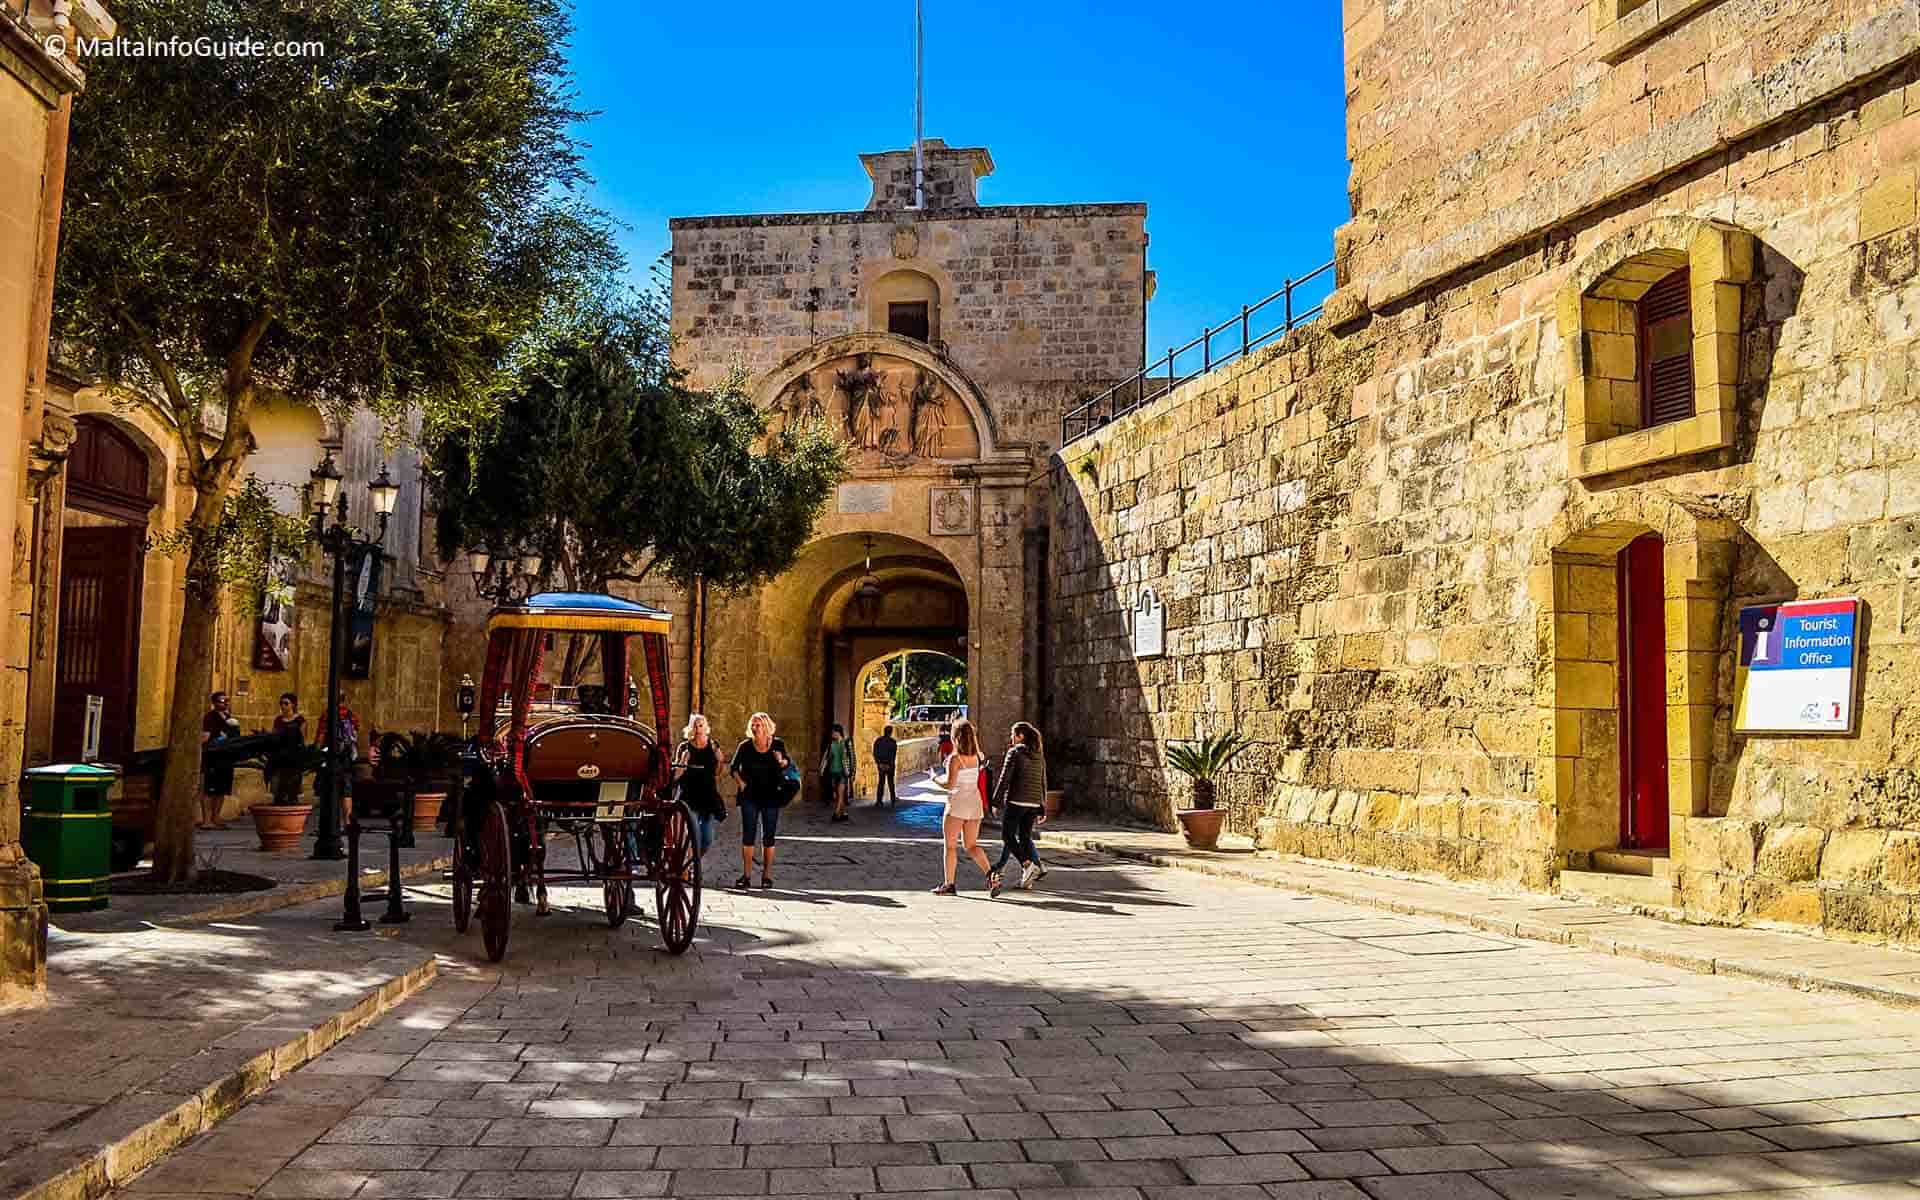 The entrance to Mdina Malta